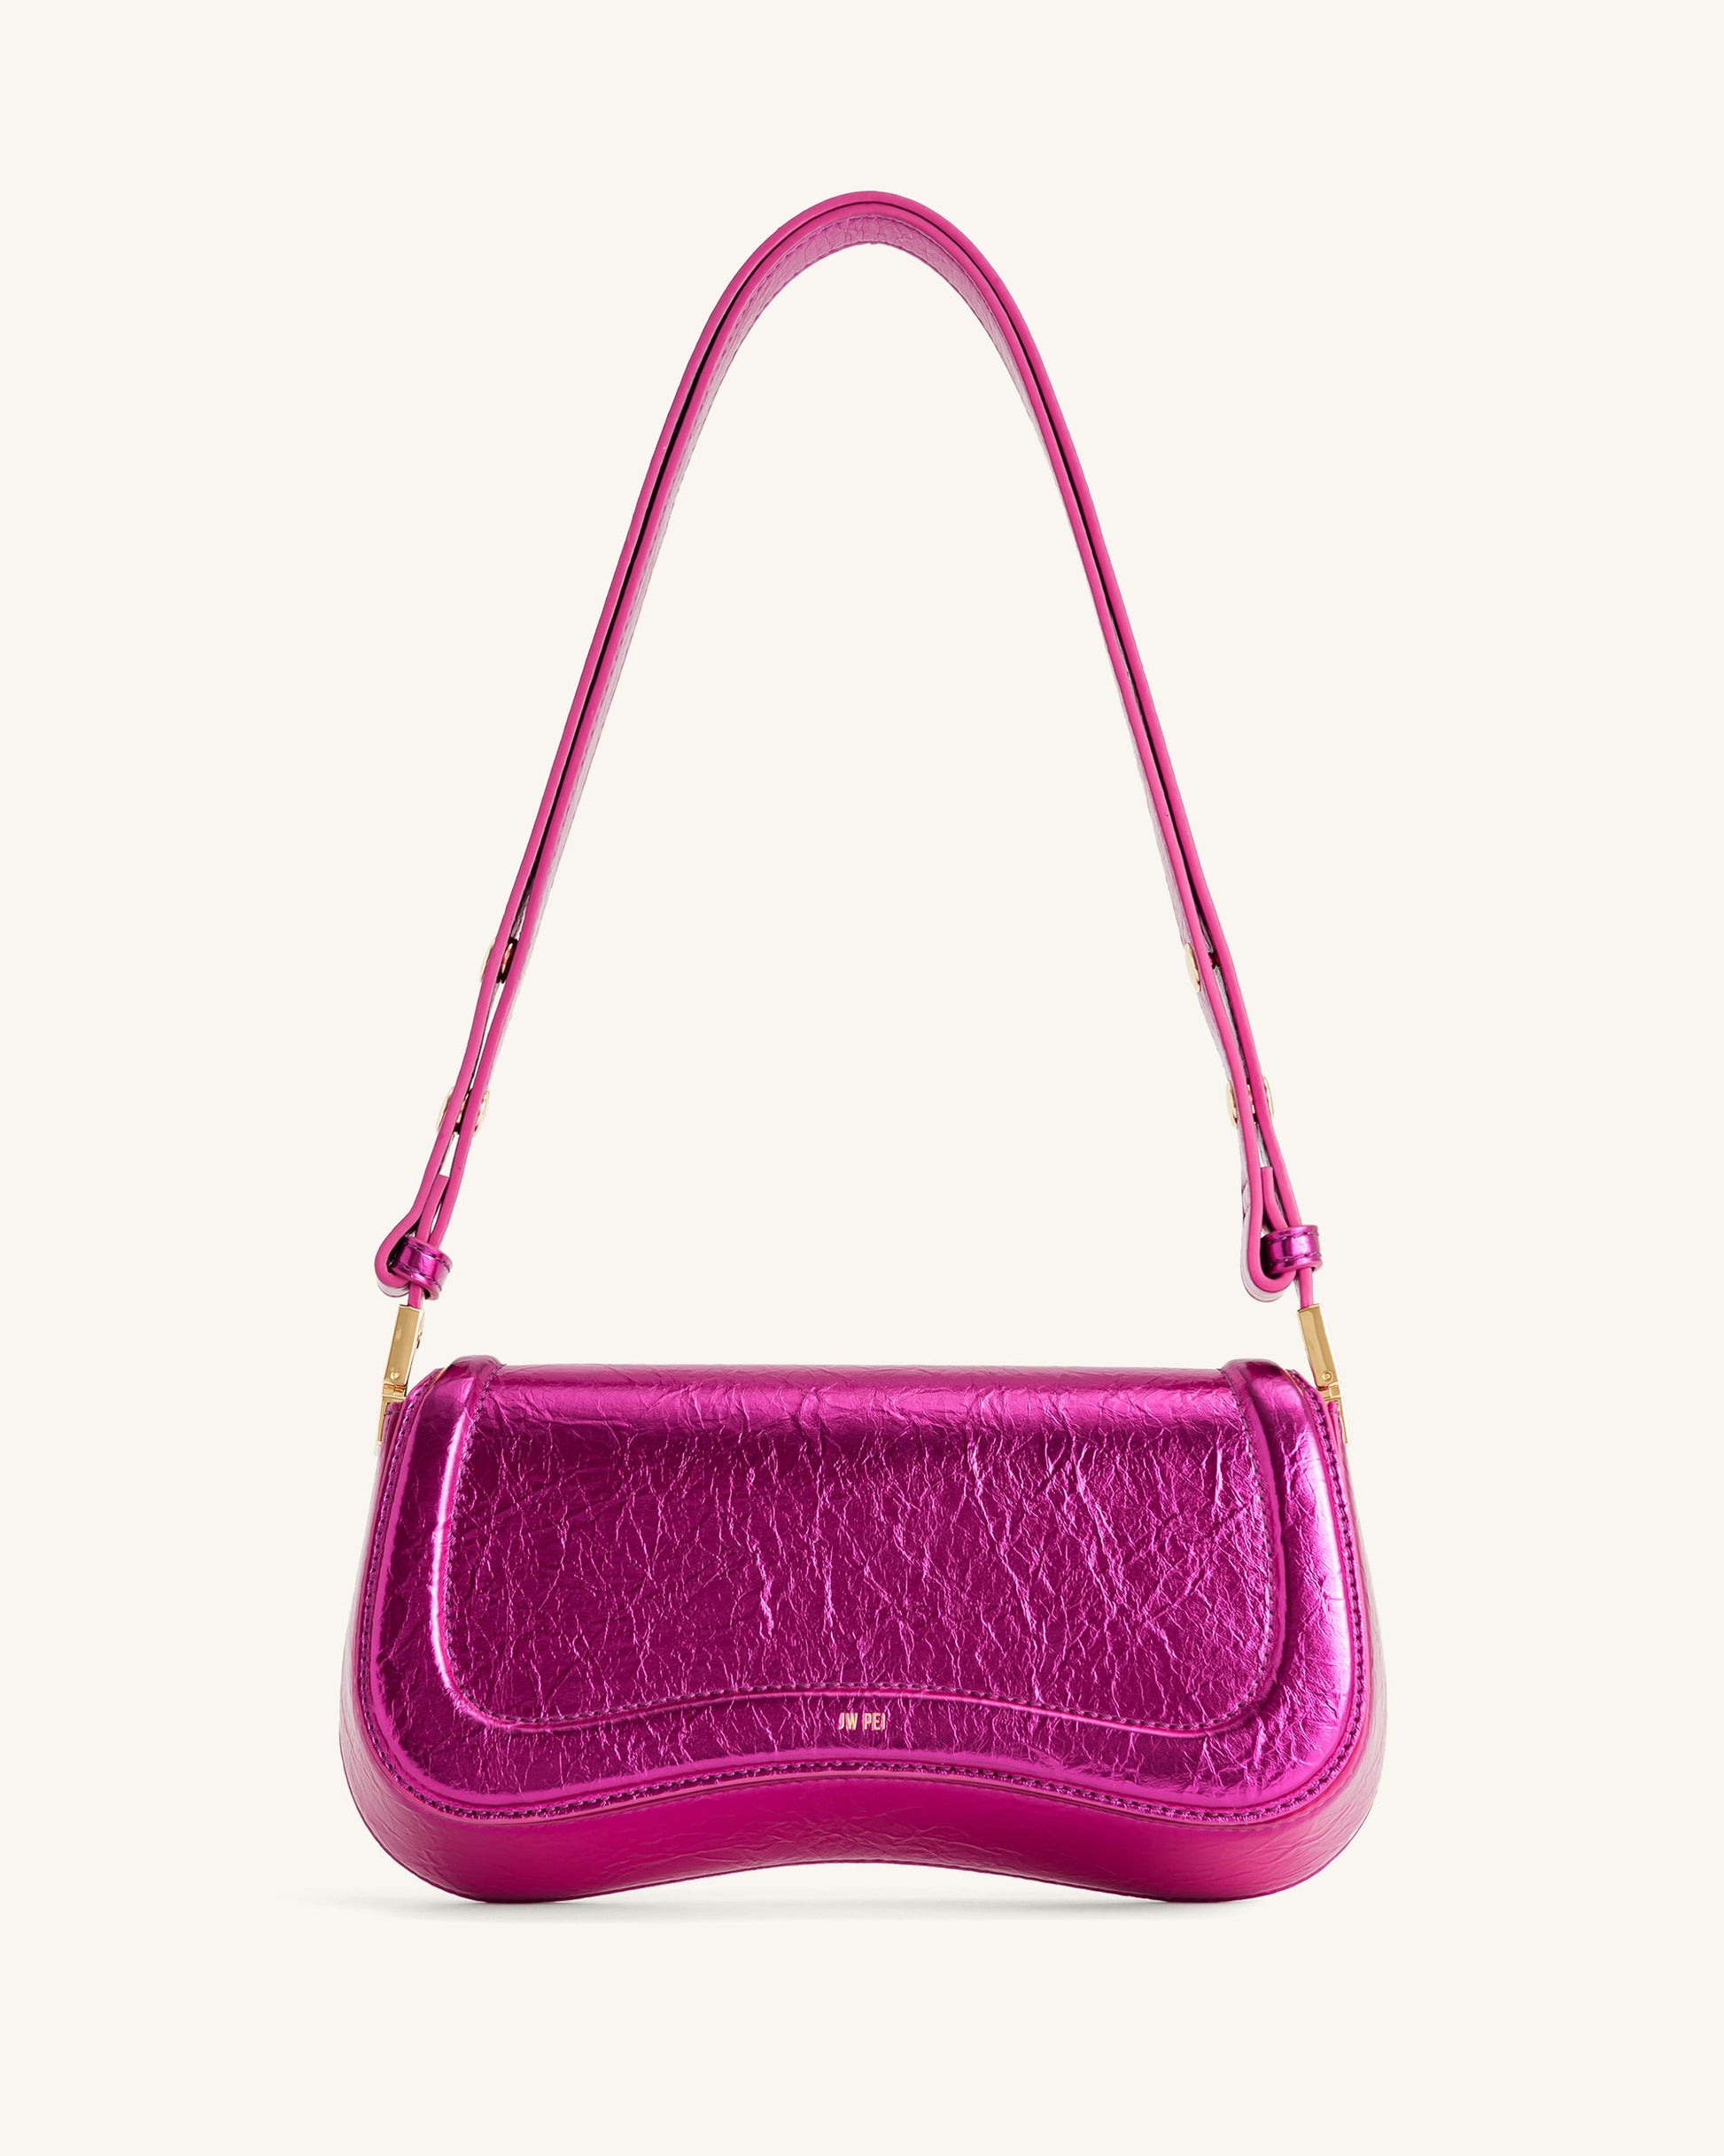 Joy Metallic Shoulder Bag - Red Violet - JW PEI UK